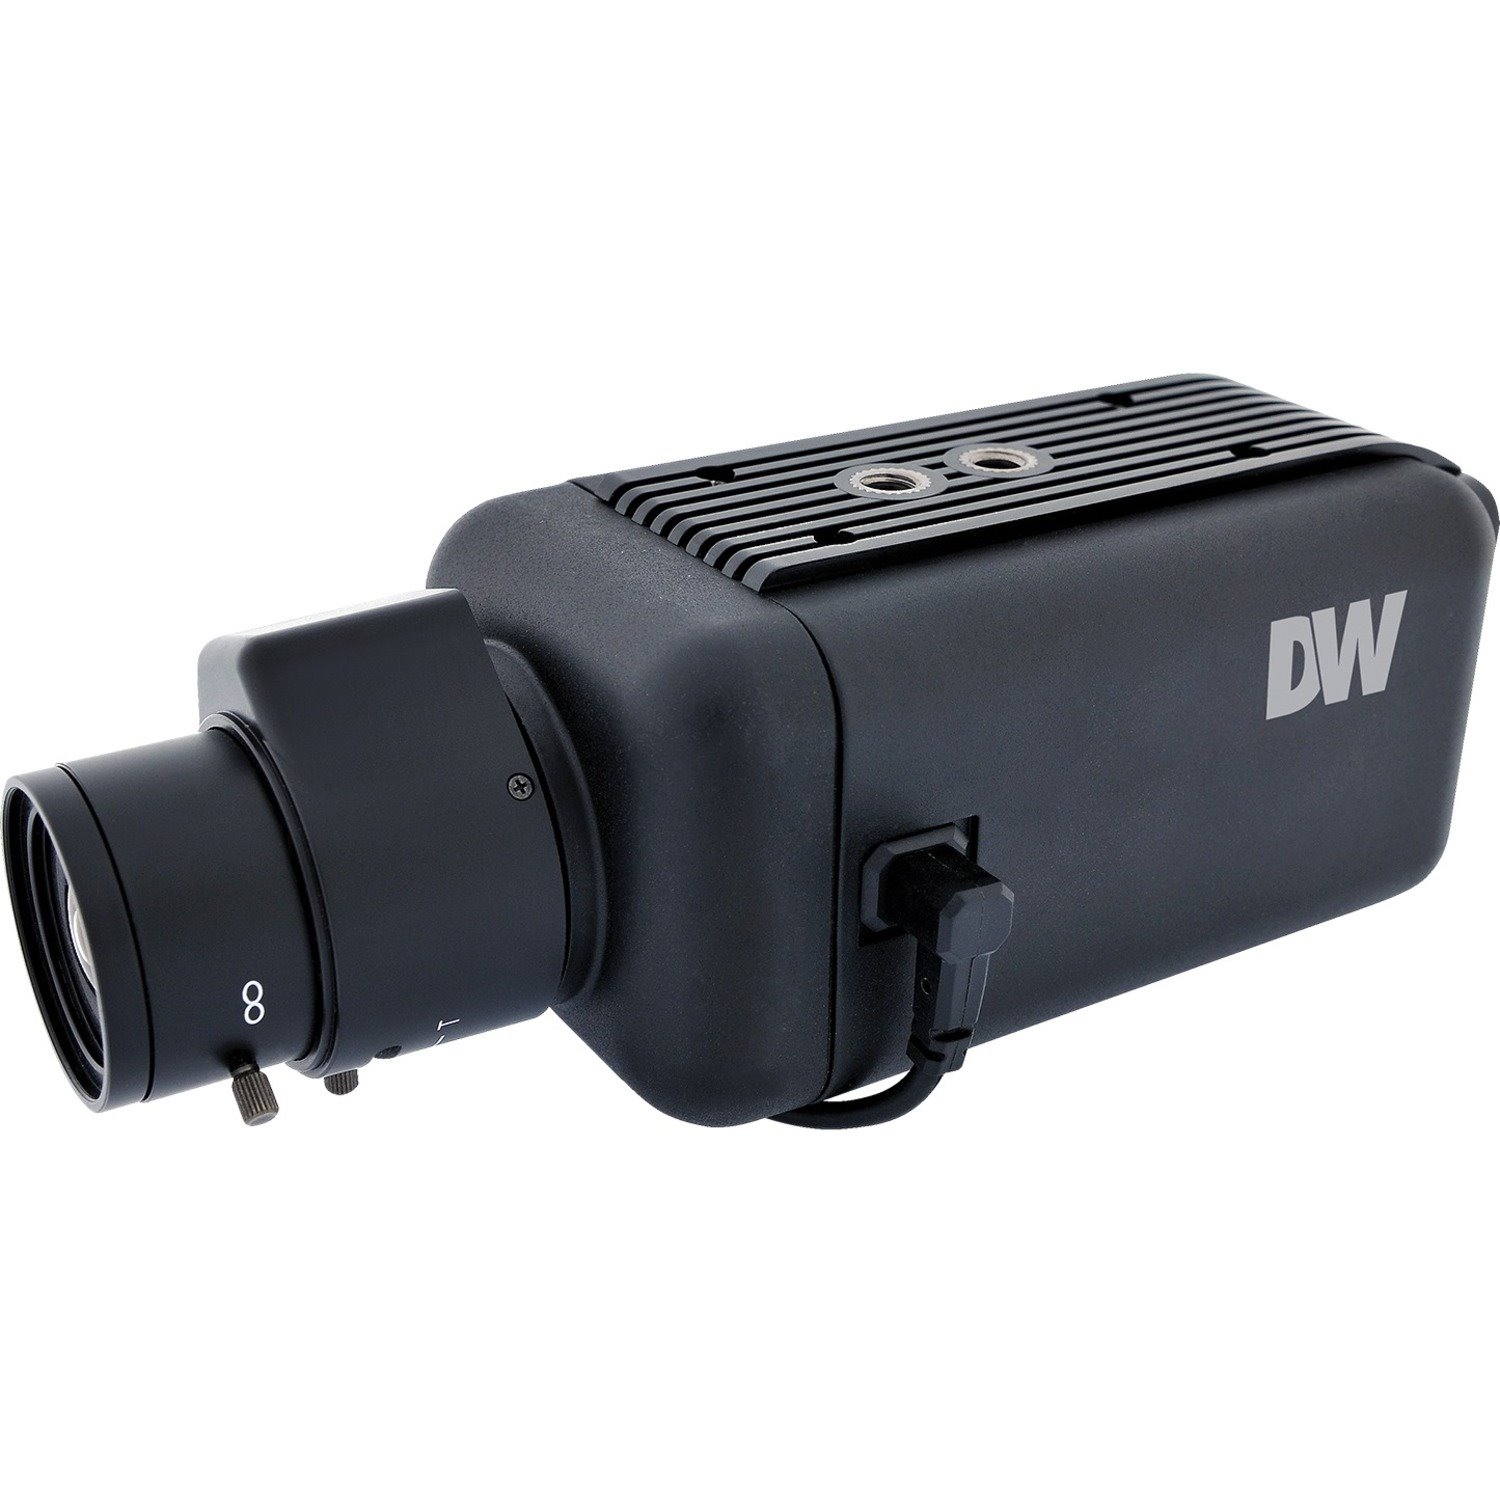 Digital Watchdog Starlight DWC-C223W 2.1 Megapixel Indoor HD Surveillance Camera - Color, Monochrome - Box